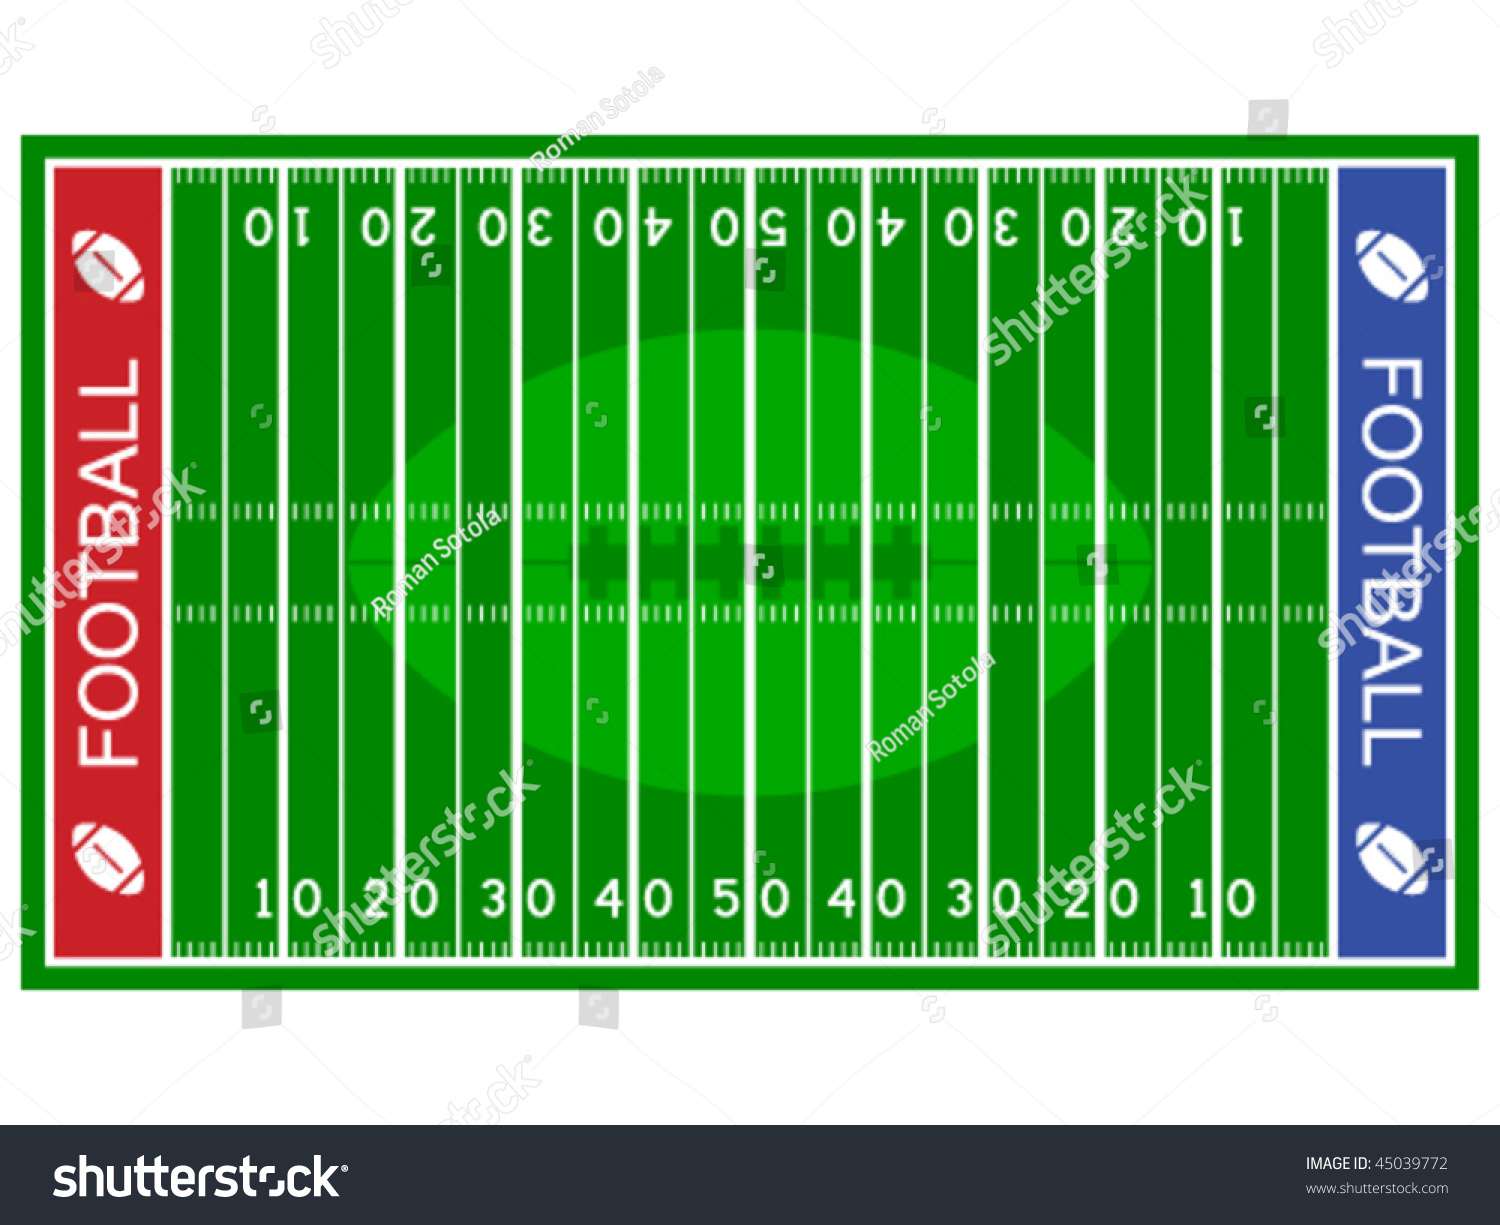 Vector American Football Field - 45039772 : Shutterstock